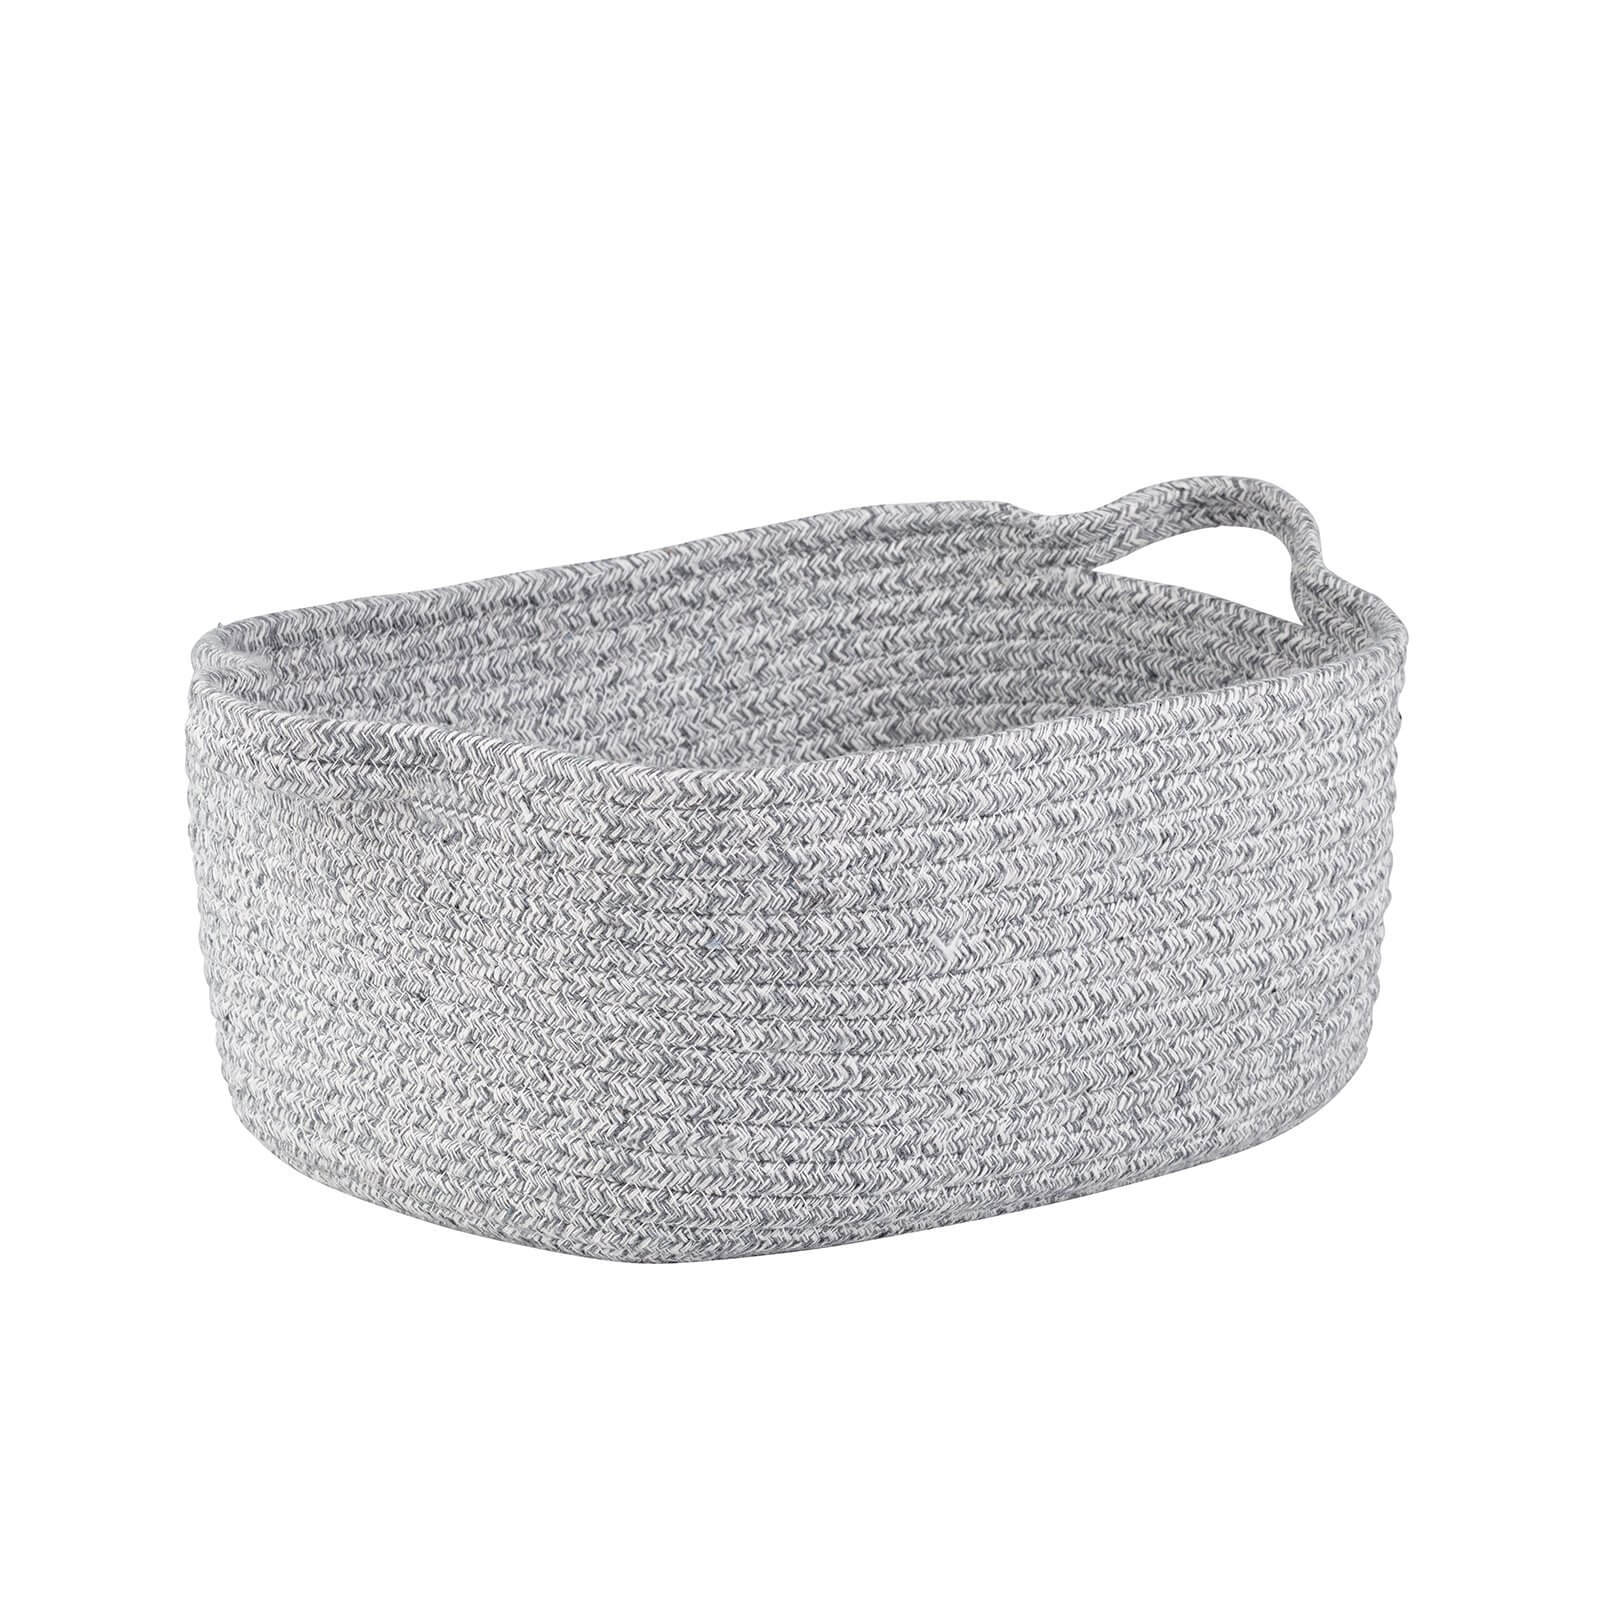 Photo of Cotton Rope Basket - Grey